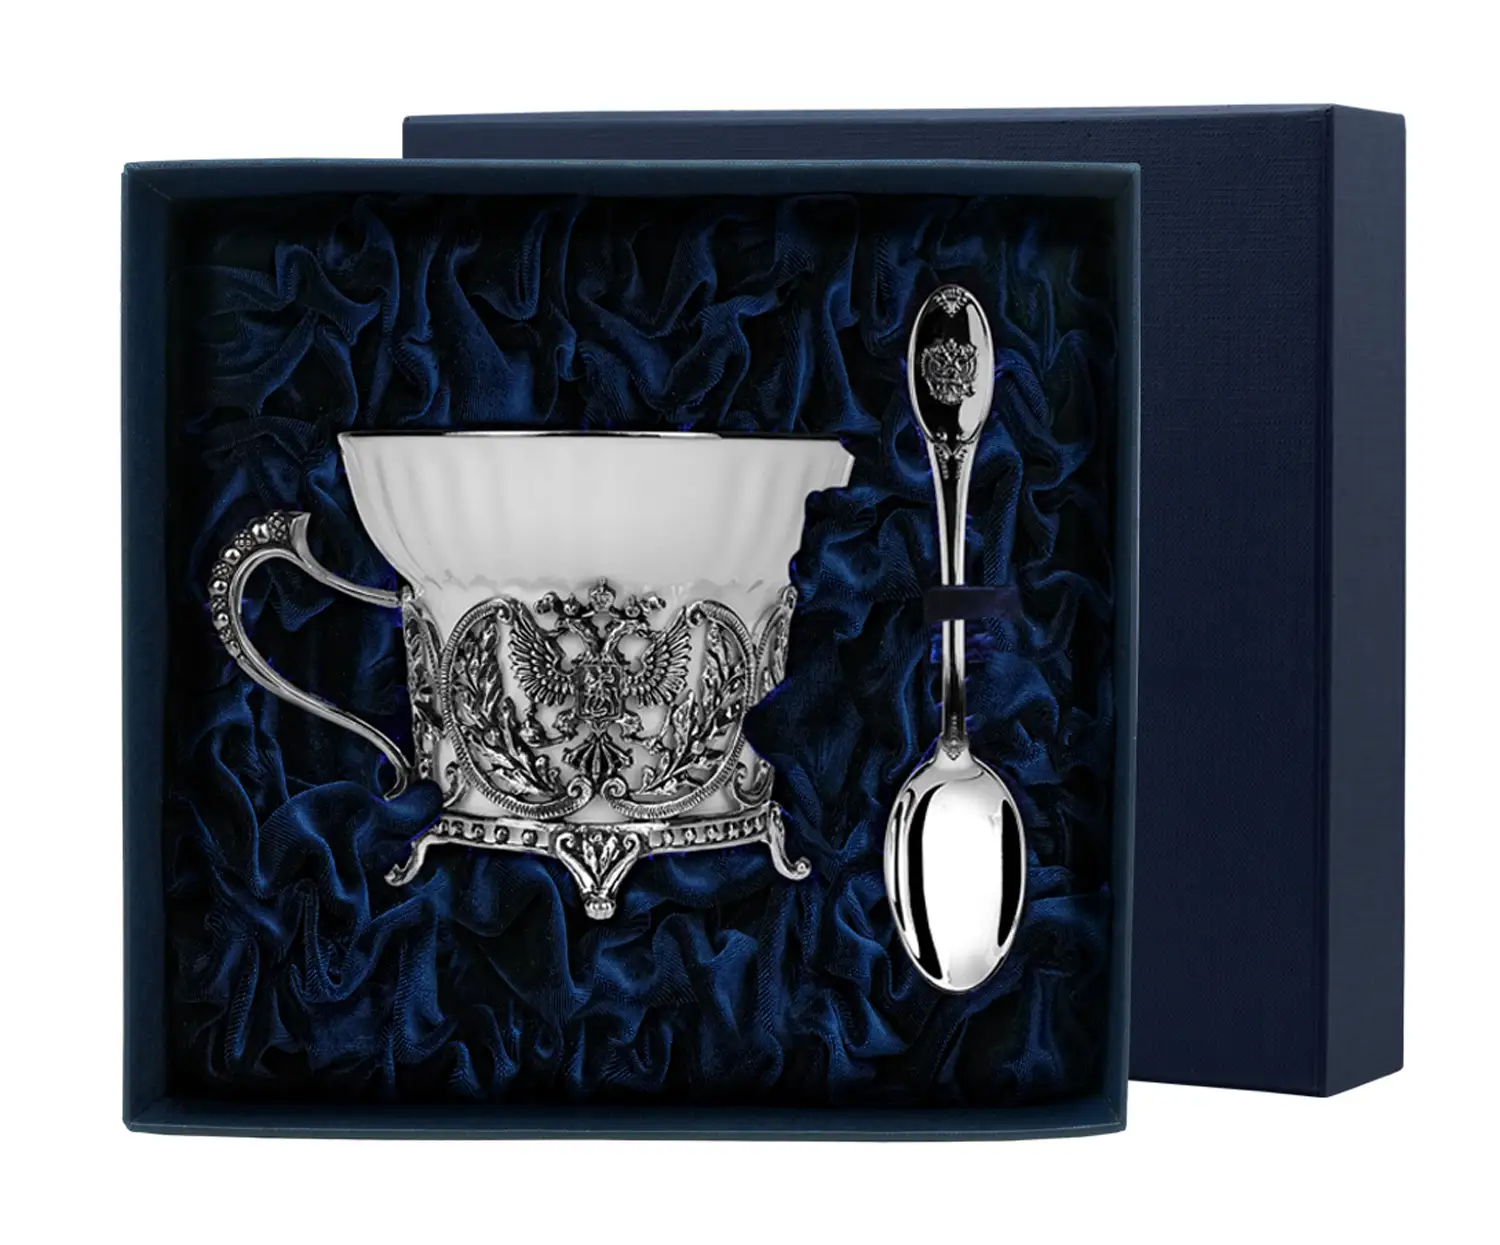 Набор чайная чашка Герб: ложка, чашка (Серебро 925) набор чайная чашка дятел ложка чашка серебро 925